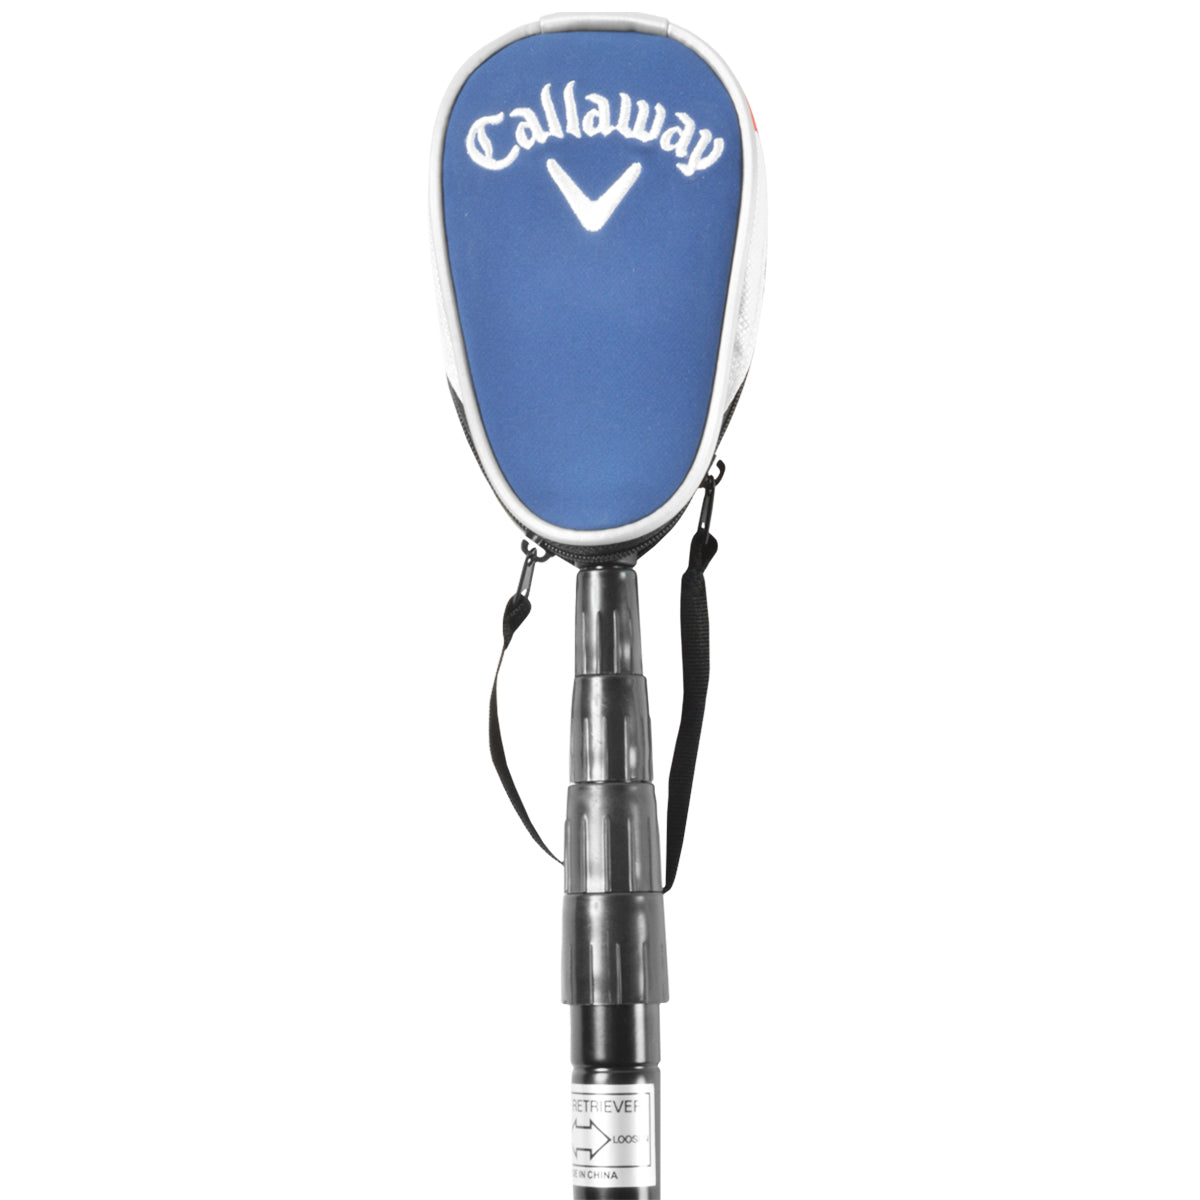 Callaway Golf Pocket 6' Ball Retriever Callaway